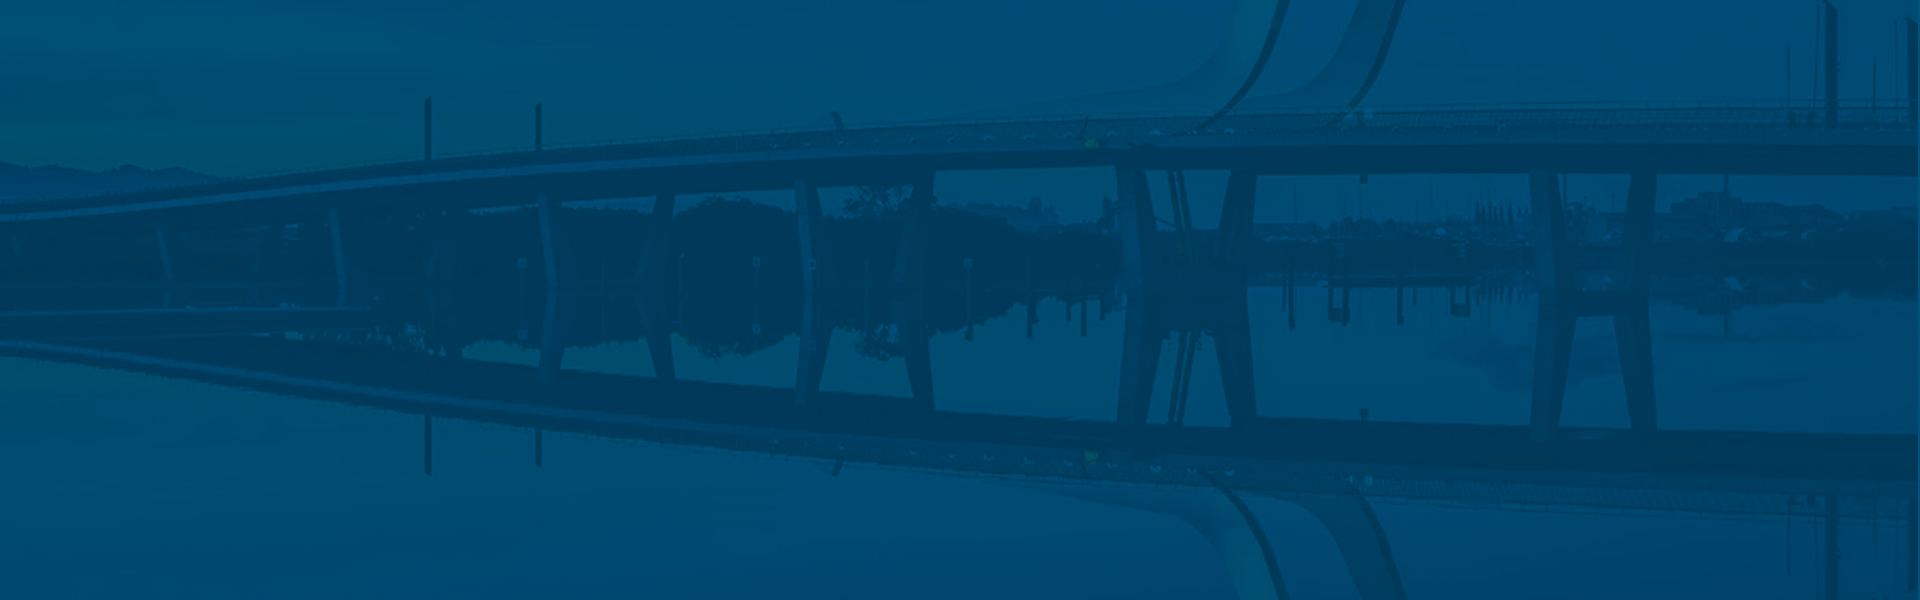 image of bridge with blue overlay